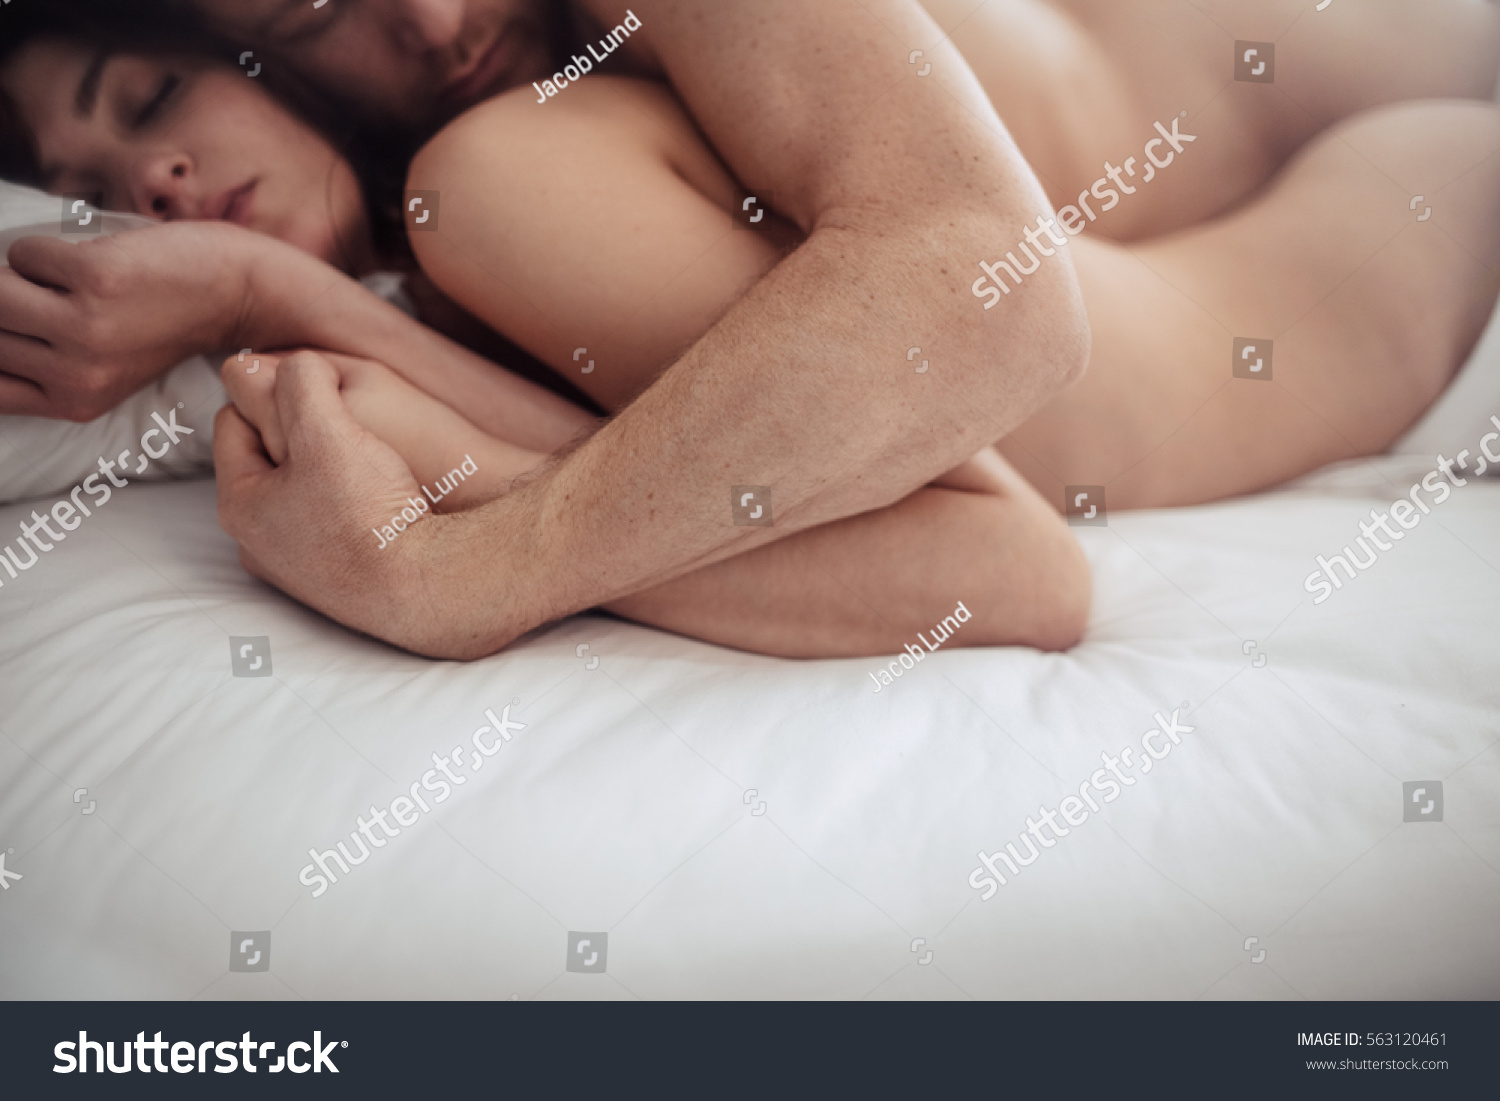 Man Sex Picher